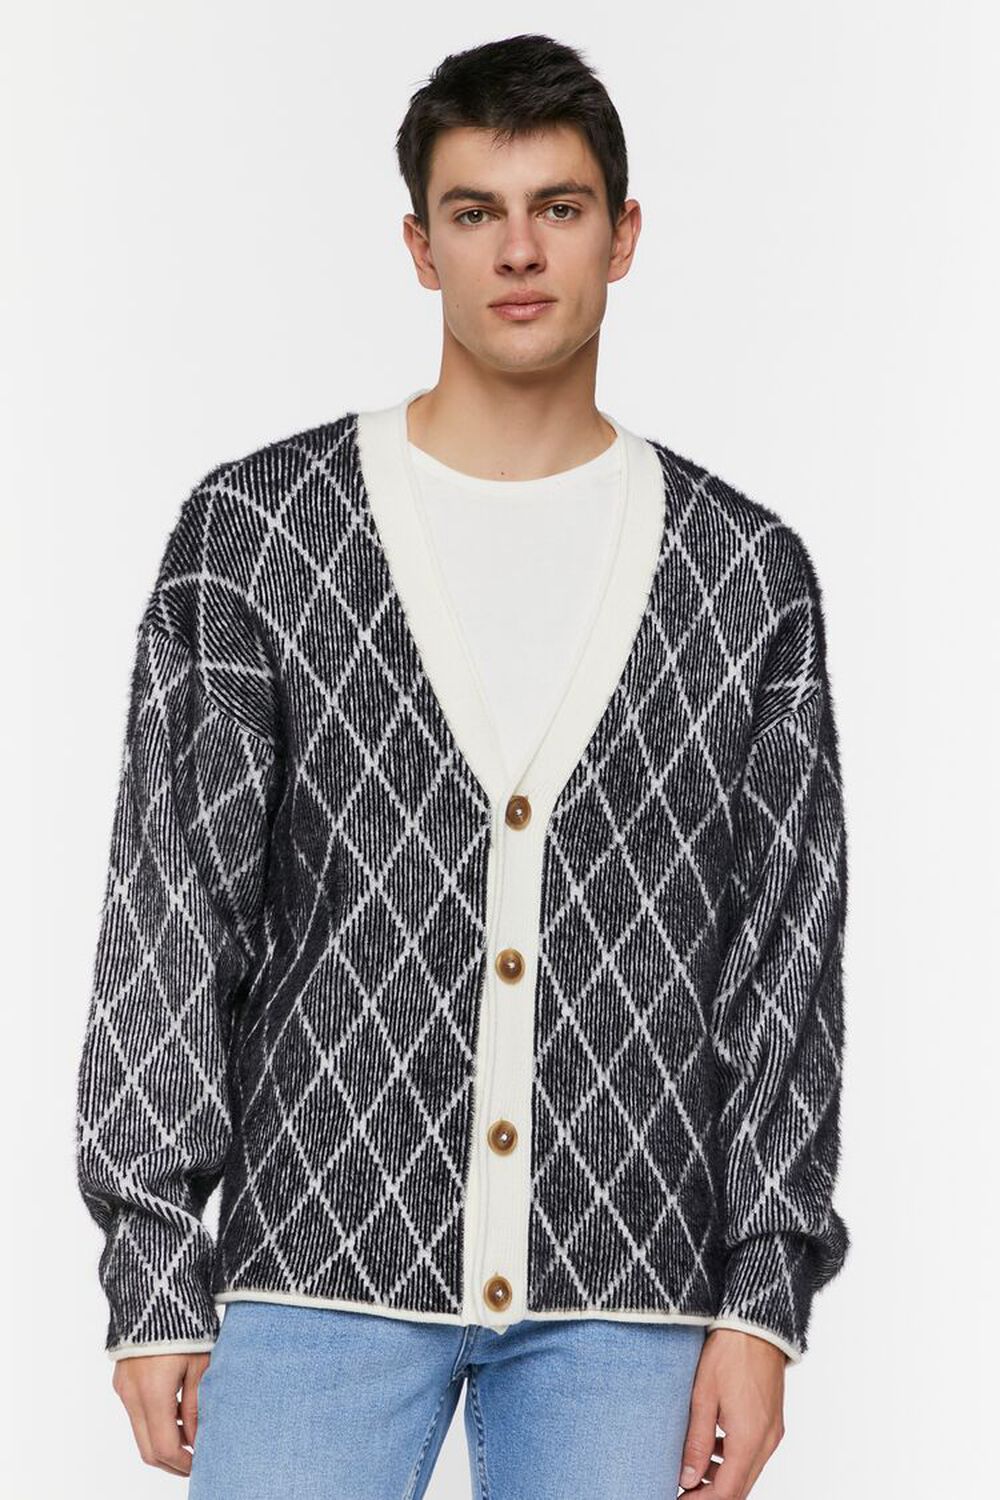 WHITE/BLACK Lattice Grid Cardigan Sweater, image 2